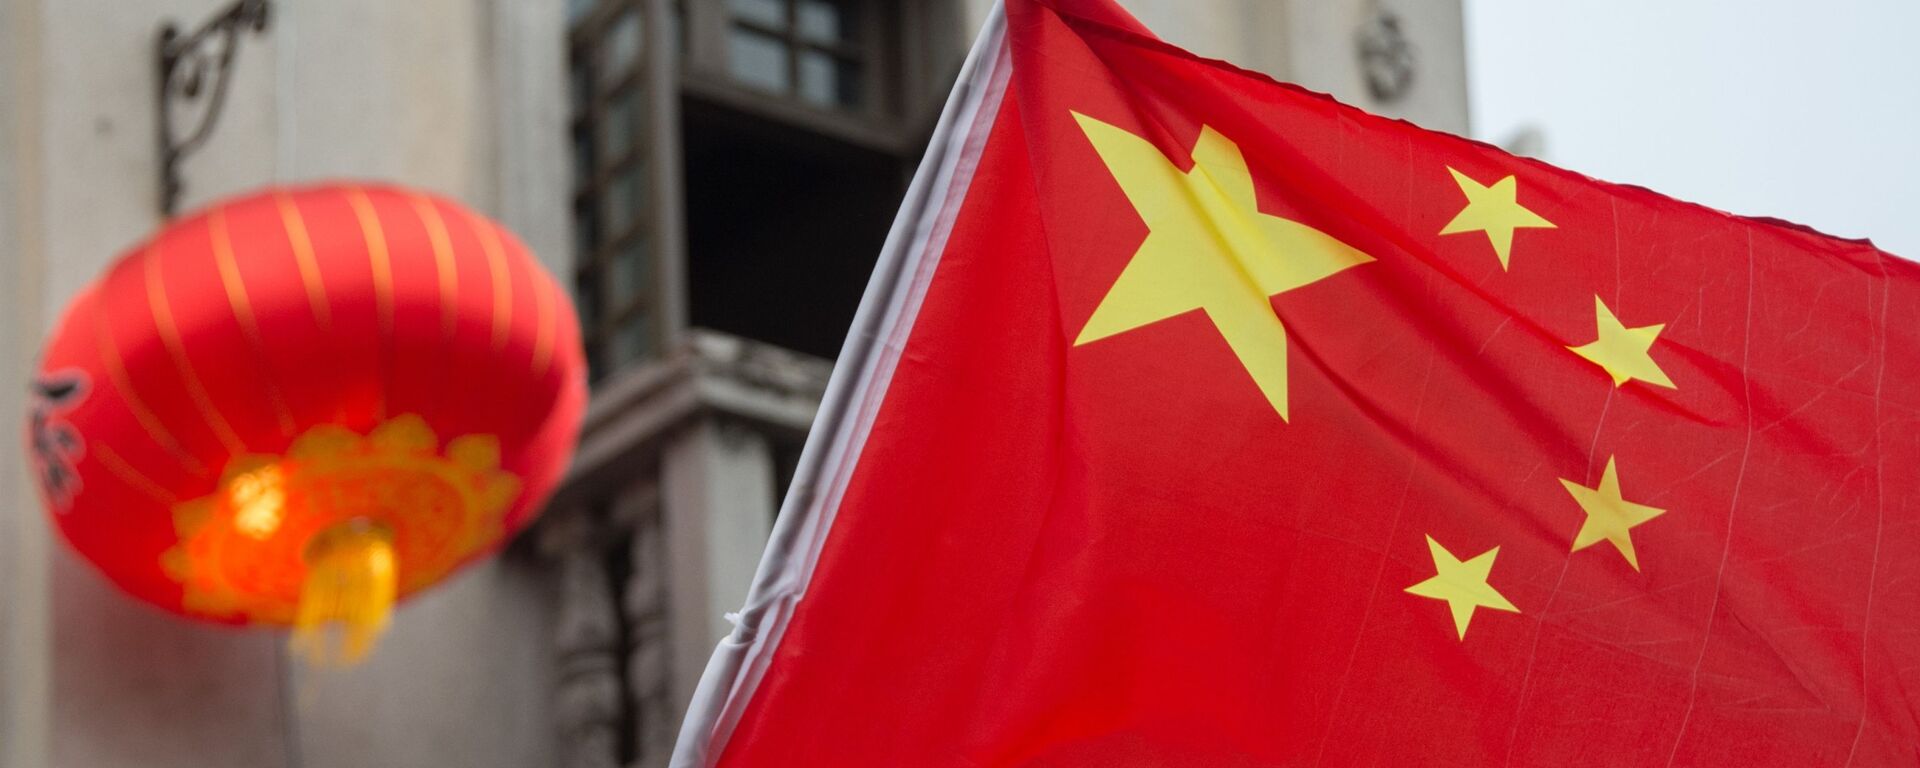 La bandera de China - Sputnik Mundo, 1920, 10.06.2021